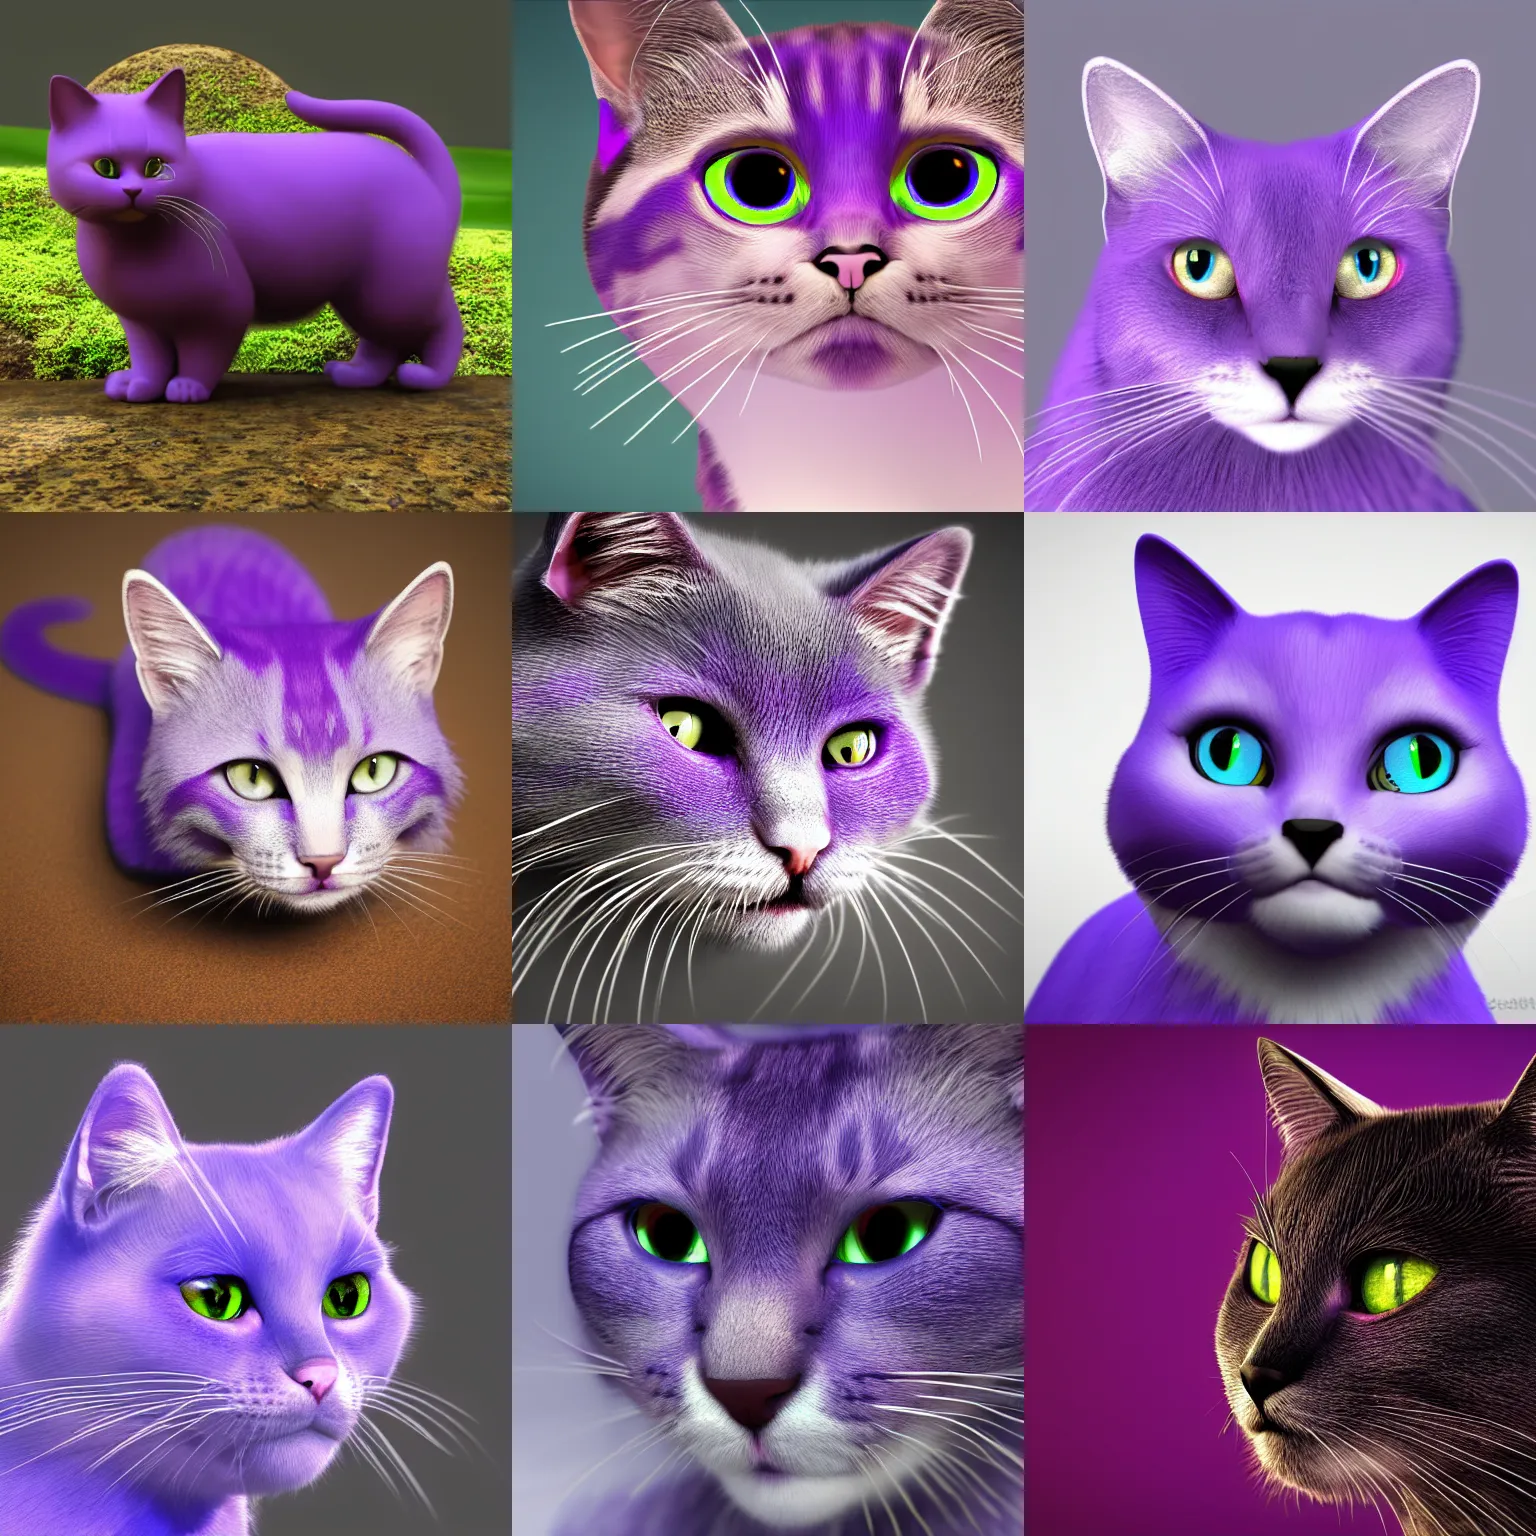 Prompt: purple cat avatar image, 4 k hyperrealistic, digital render